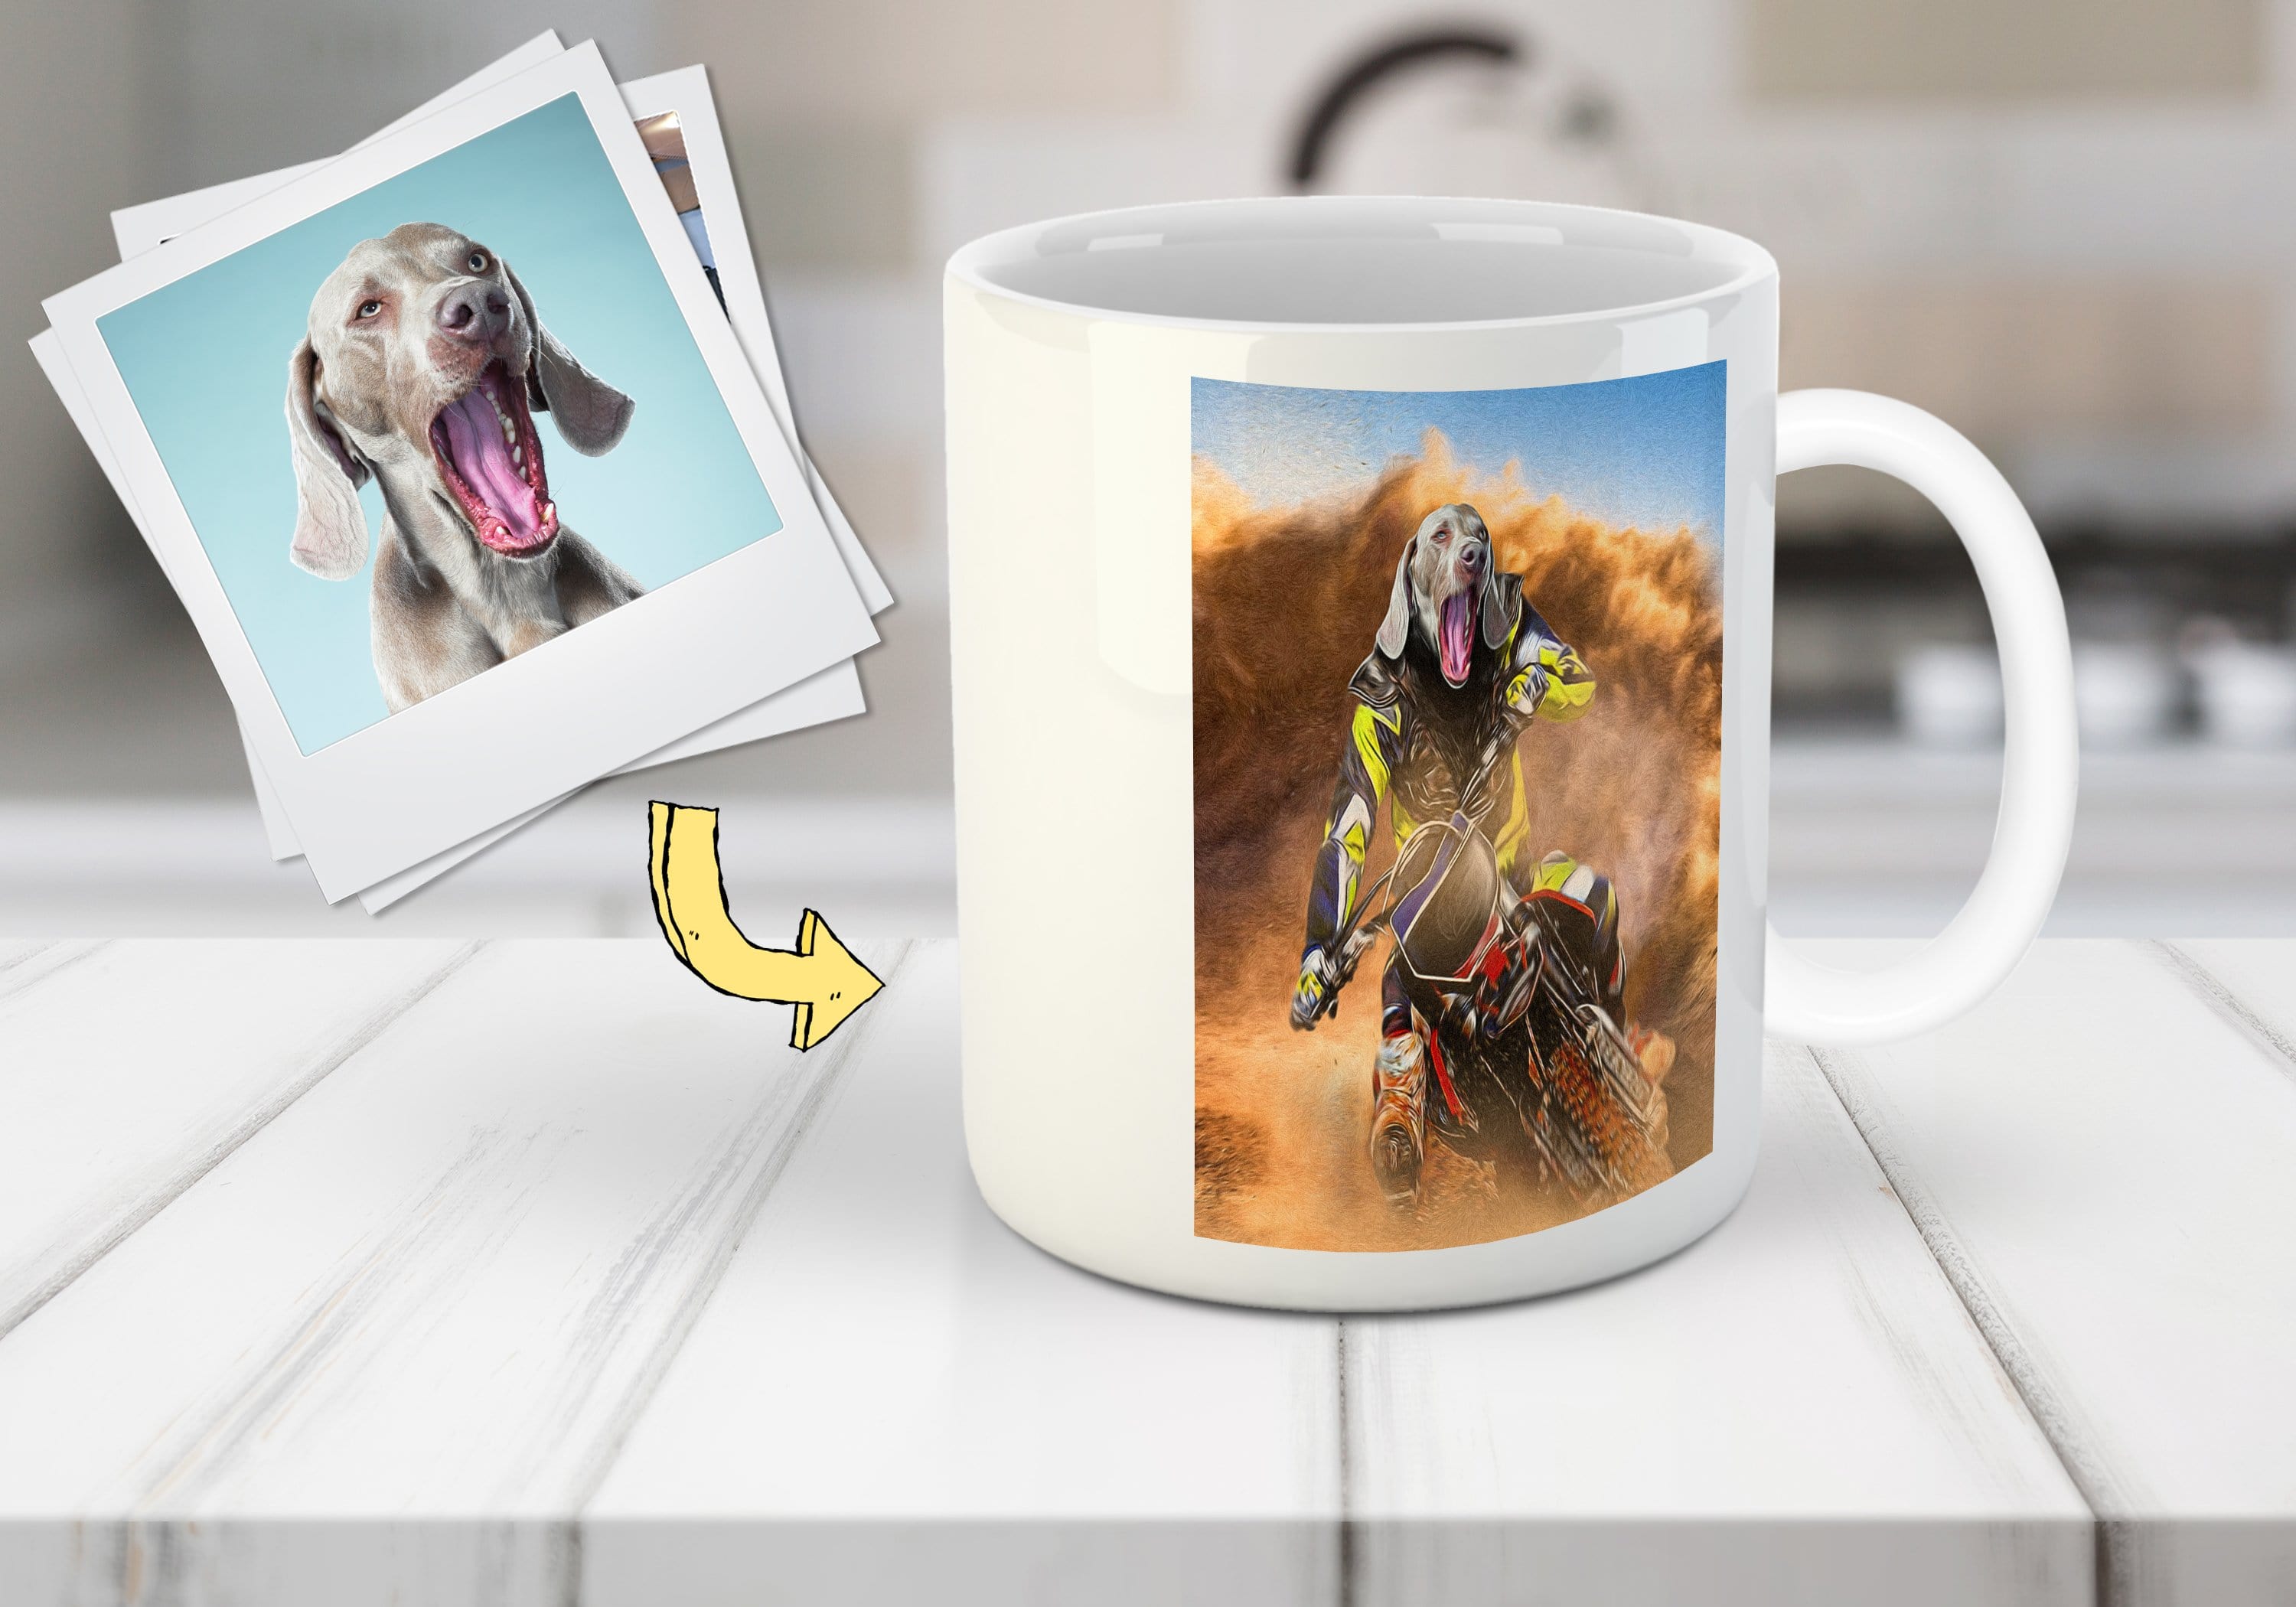 &#39;The Motocross Rider&#39; Personalized Pet Mug